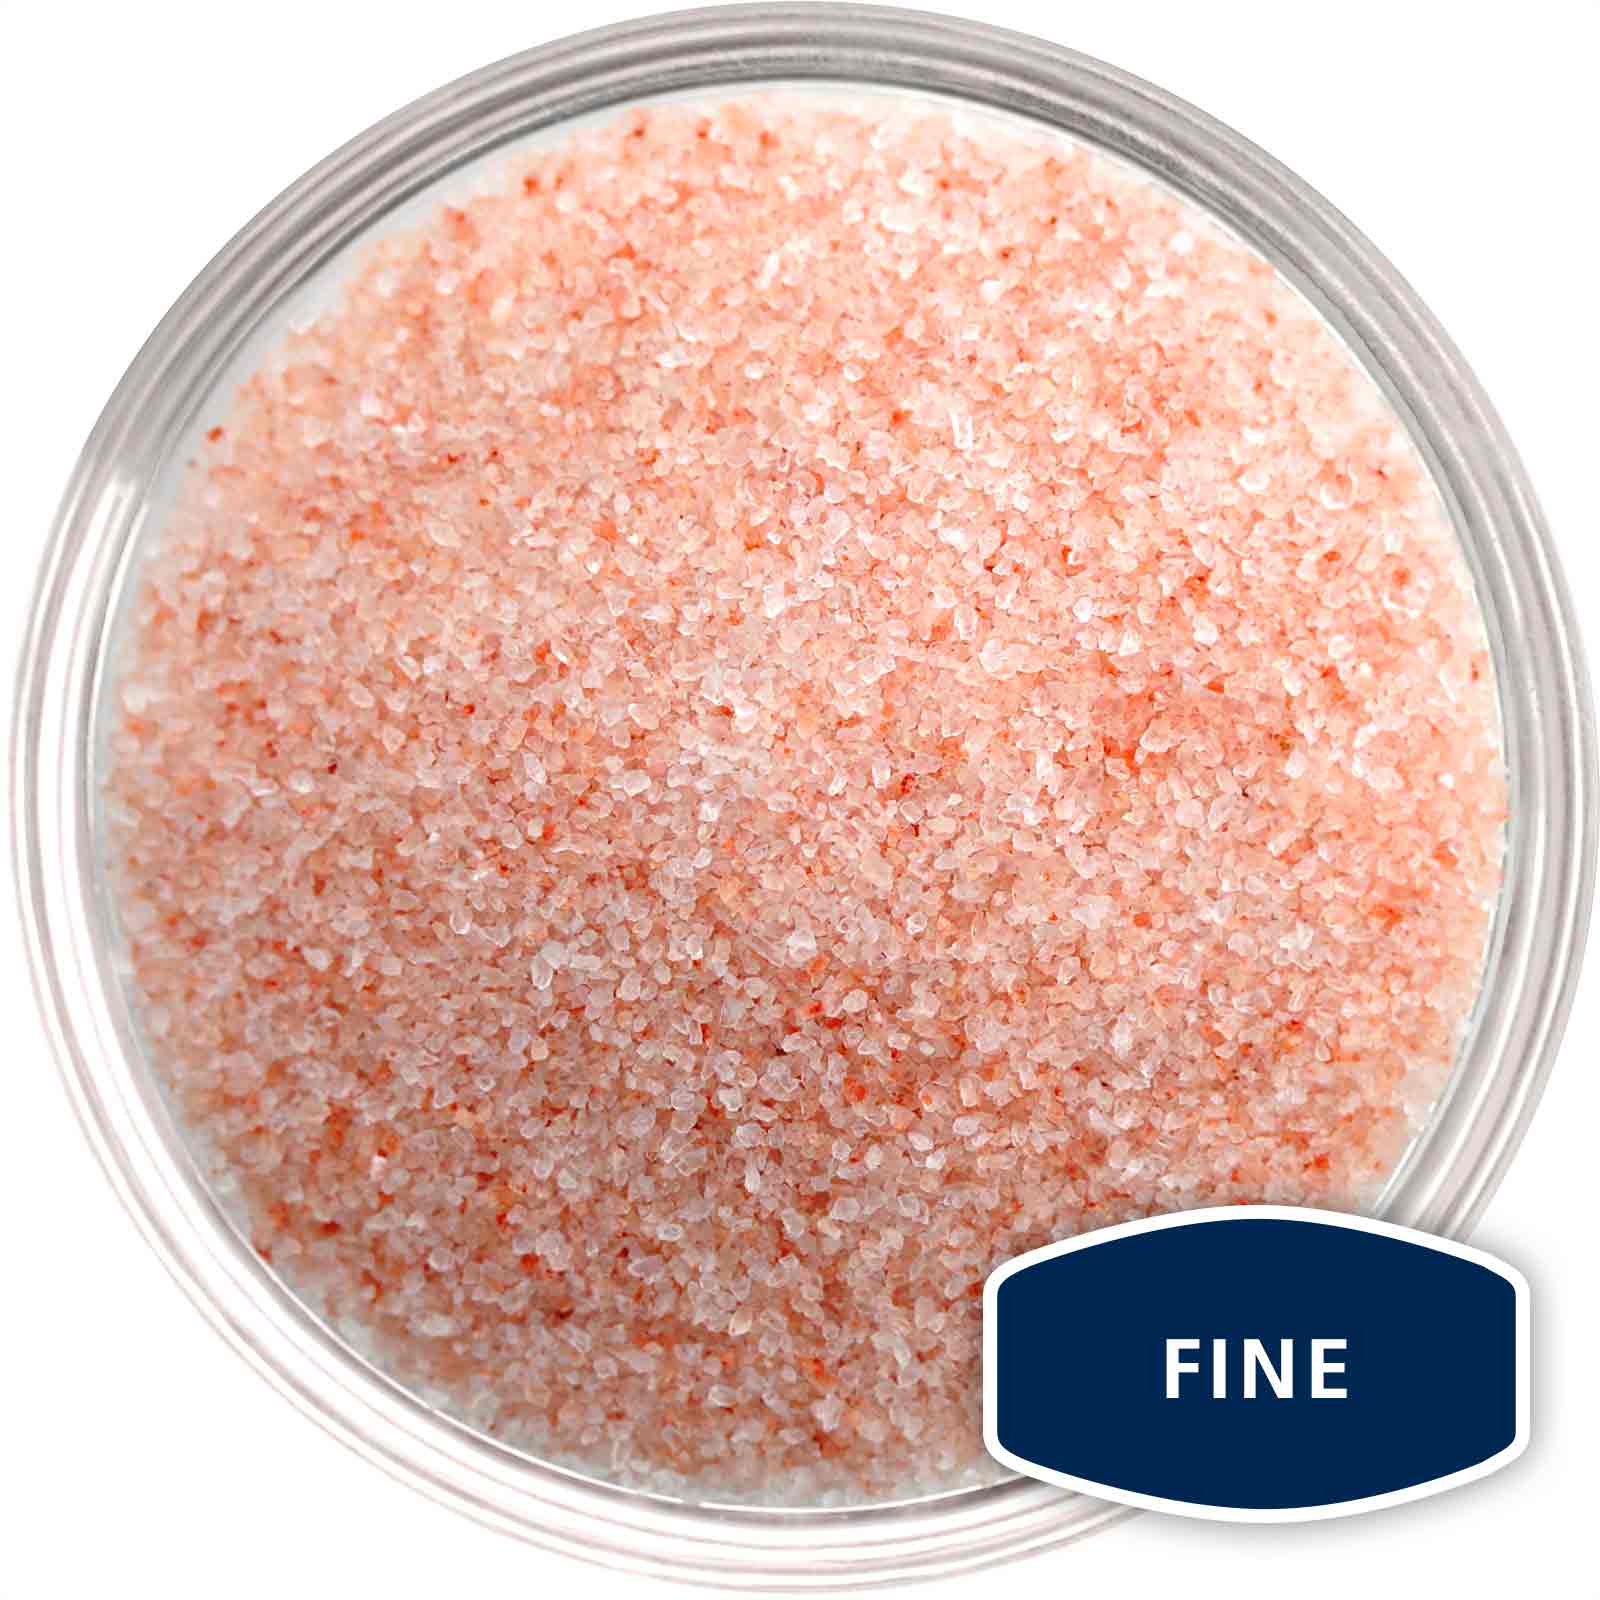 Bowl of fine grain Himalayan salt